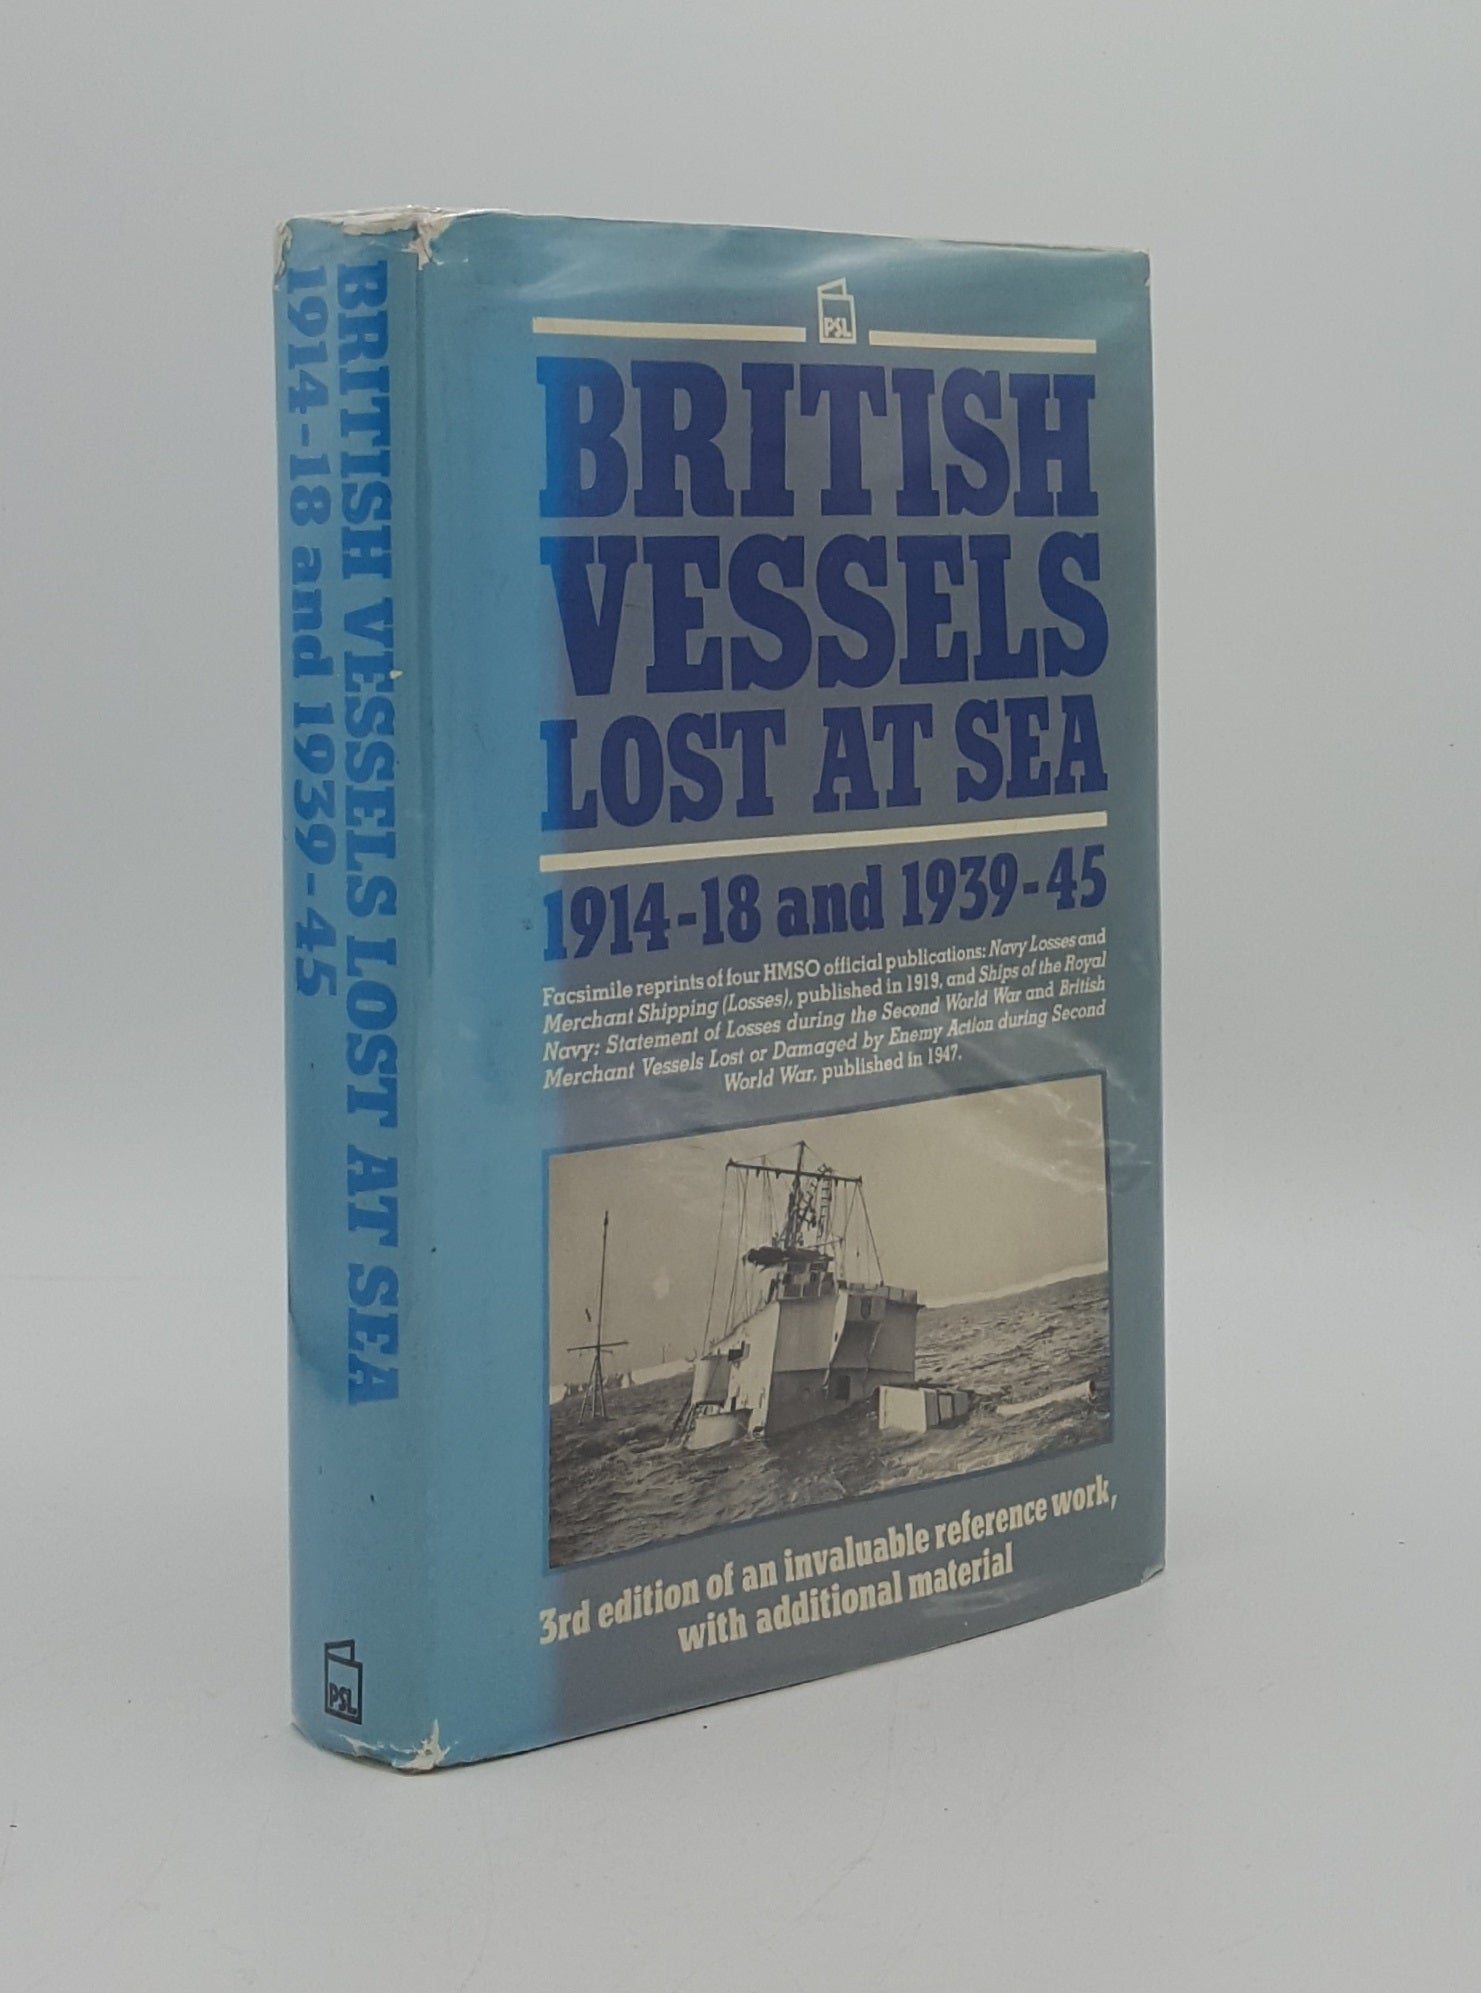 HMSO - British Vessels Lost at Sea 1914-18 and 1939-45